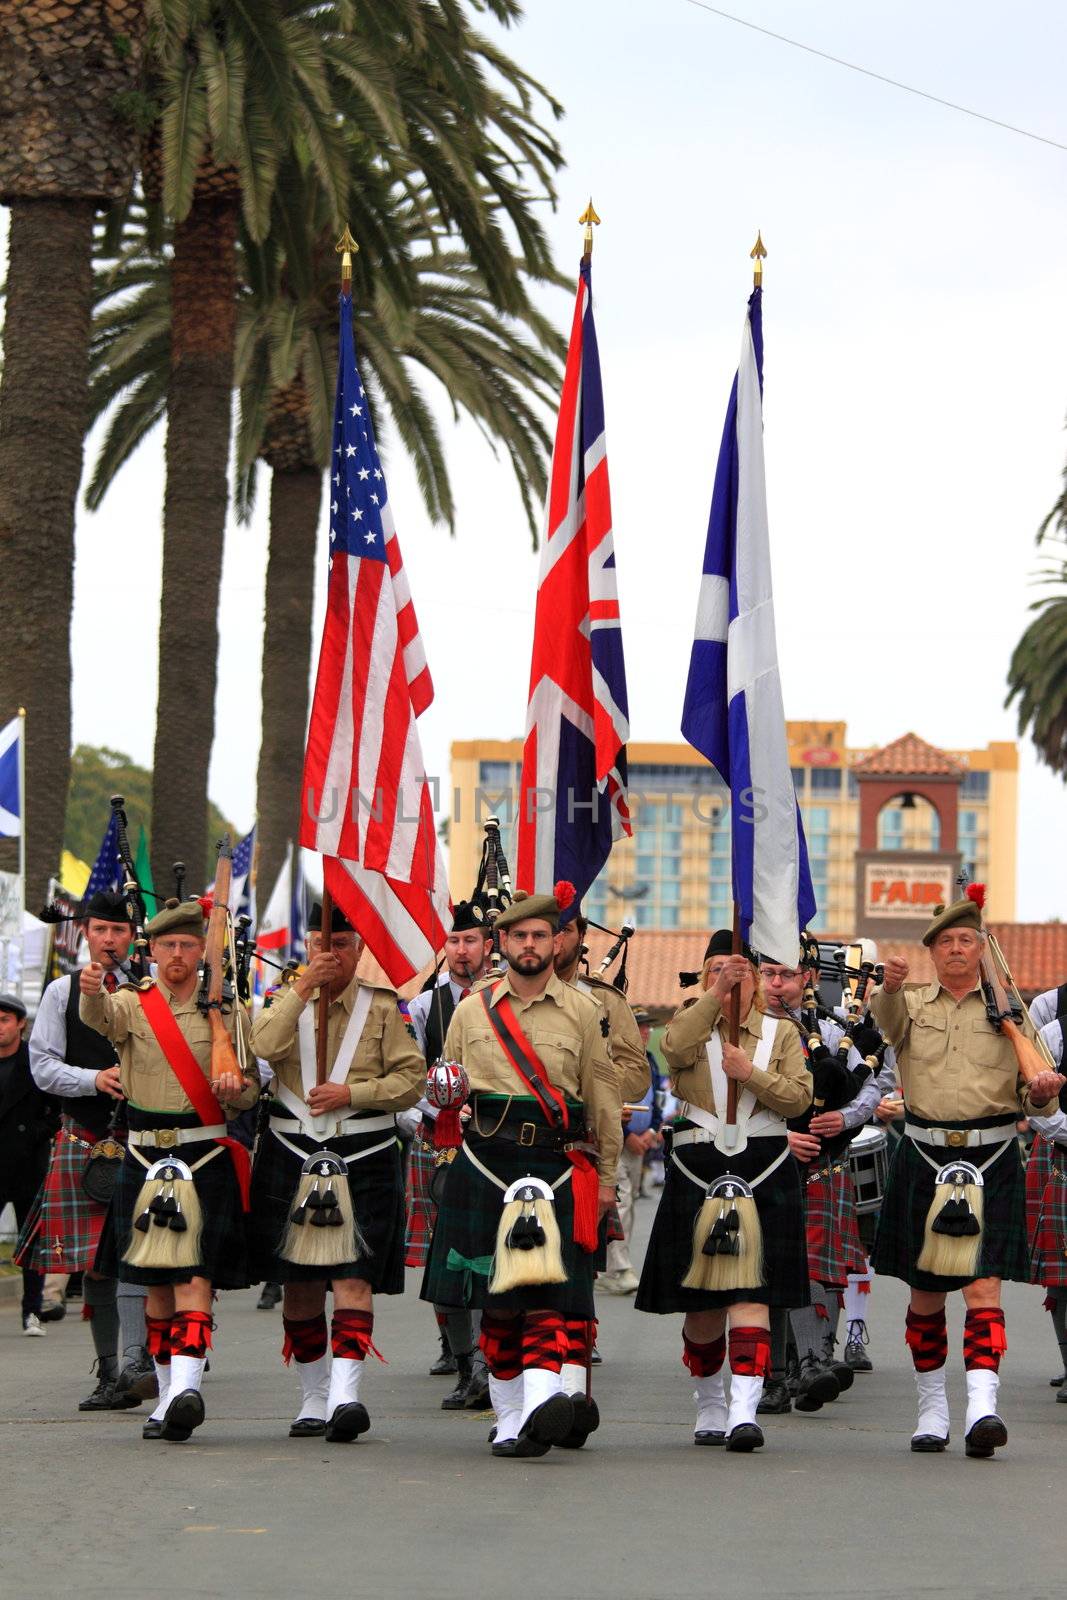 VENTURA, CA, USA - October 11, 2009 - Bagpipe bands participating in a parade at the Ventura Seaside Highland Games October 11, 2009 in Ventura, CA